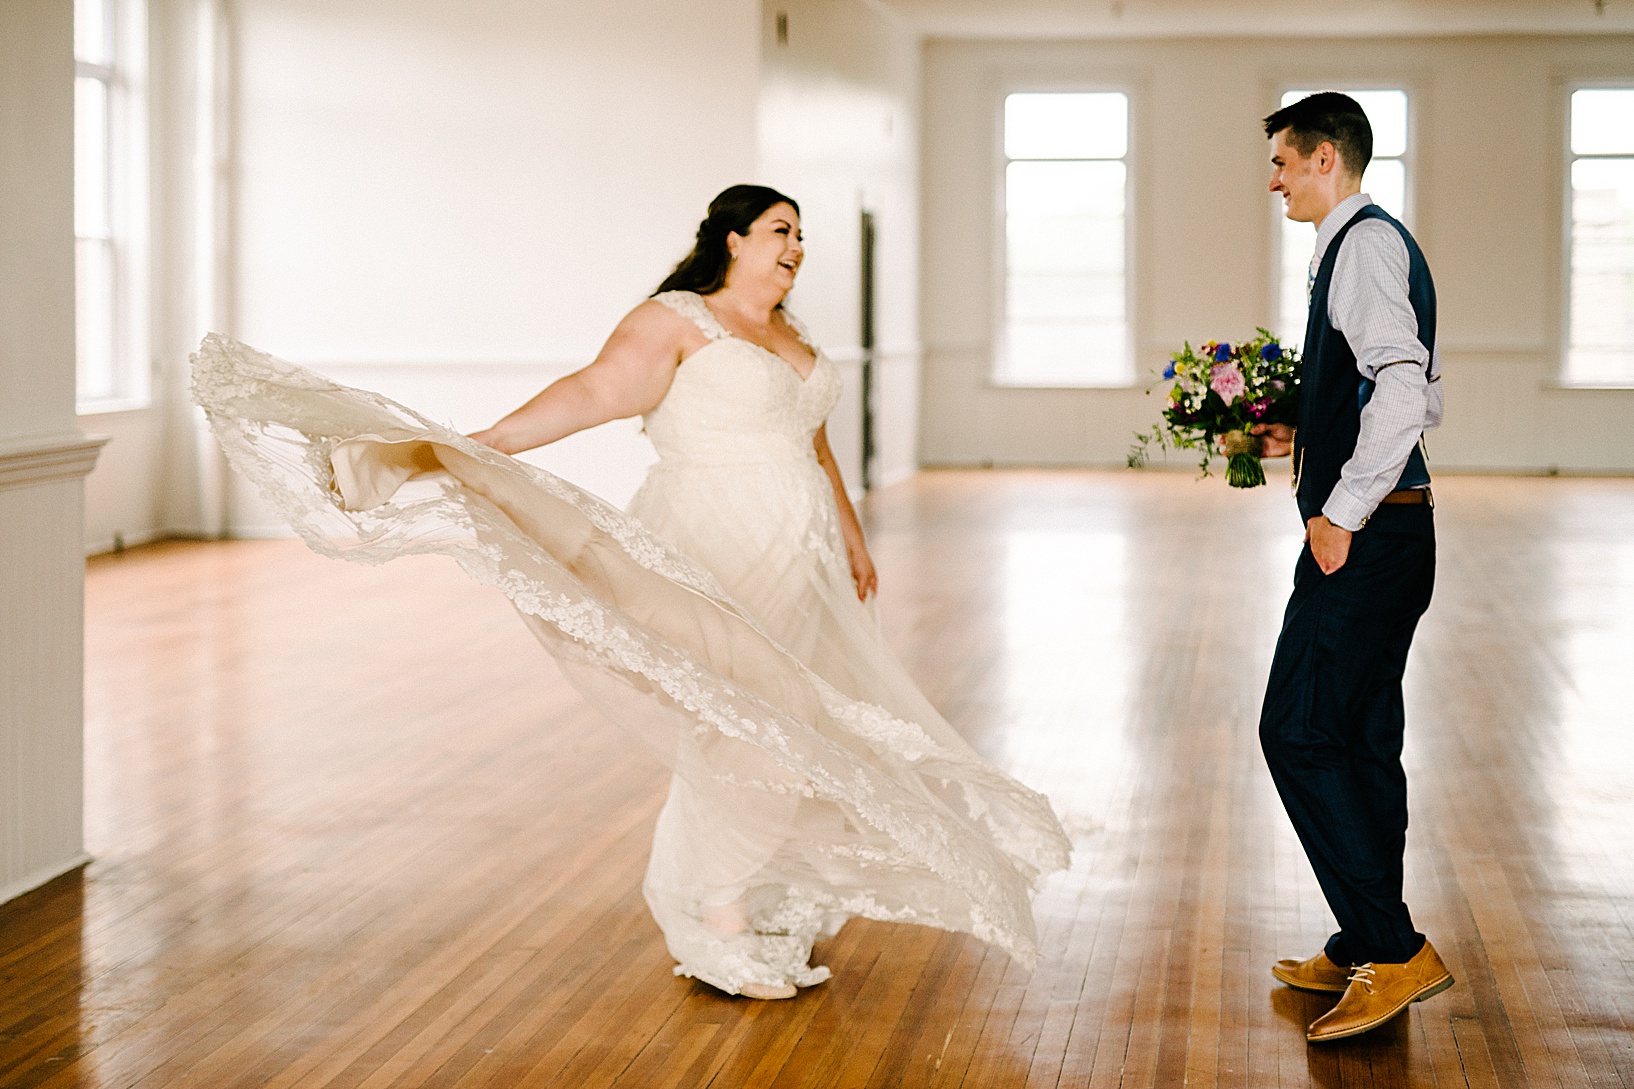 Bride twirls her wedding gown as groom holds her bouquet